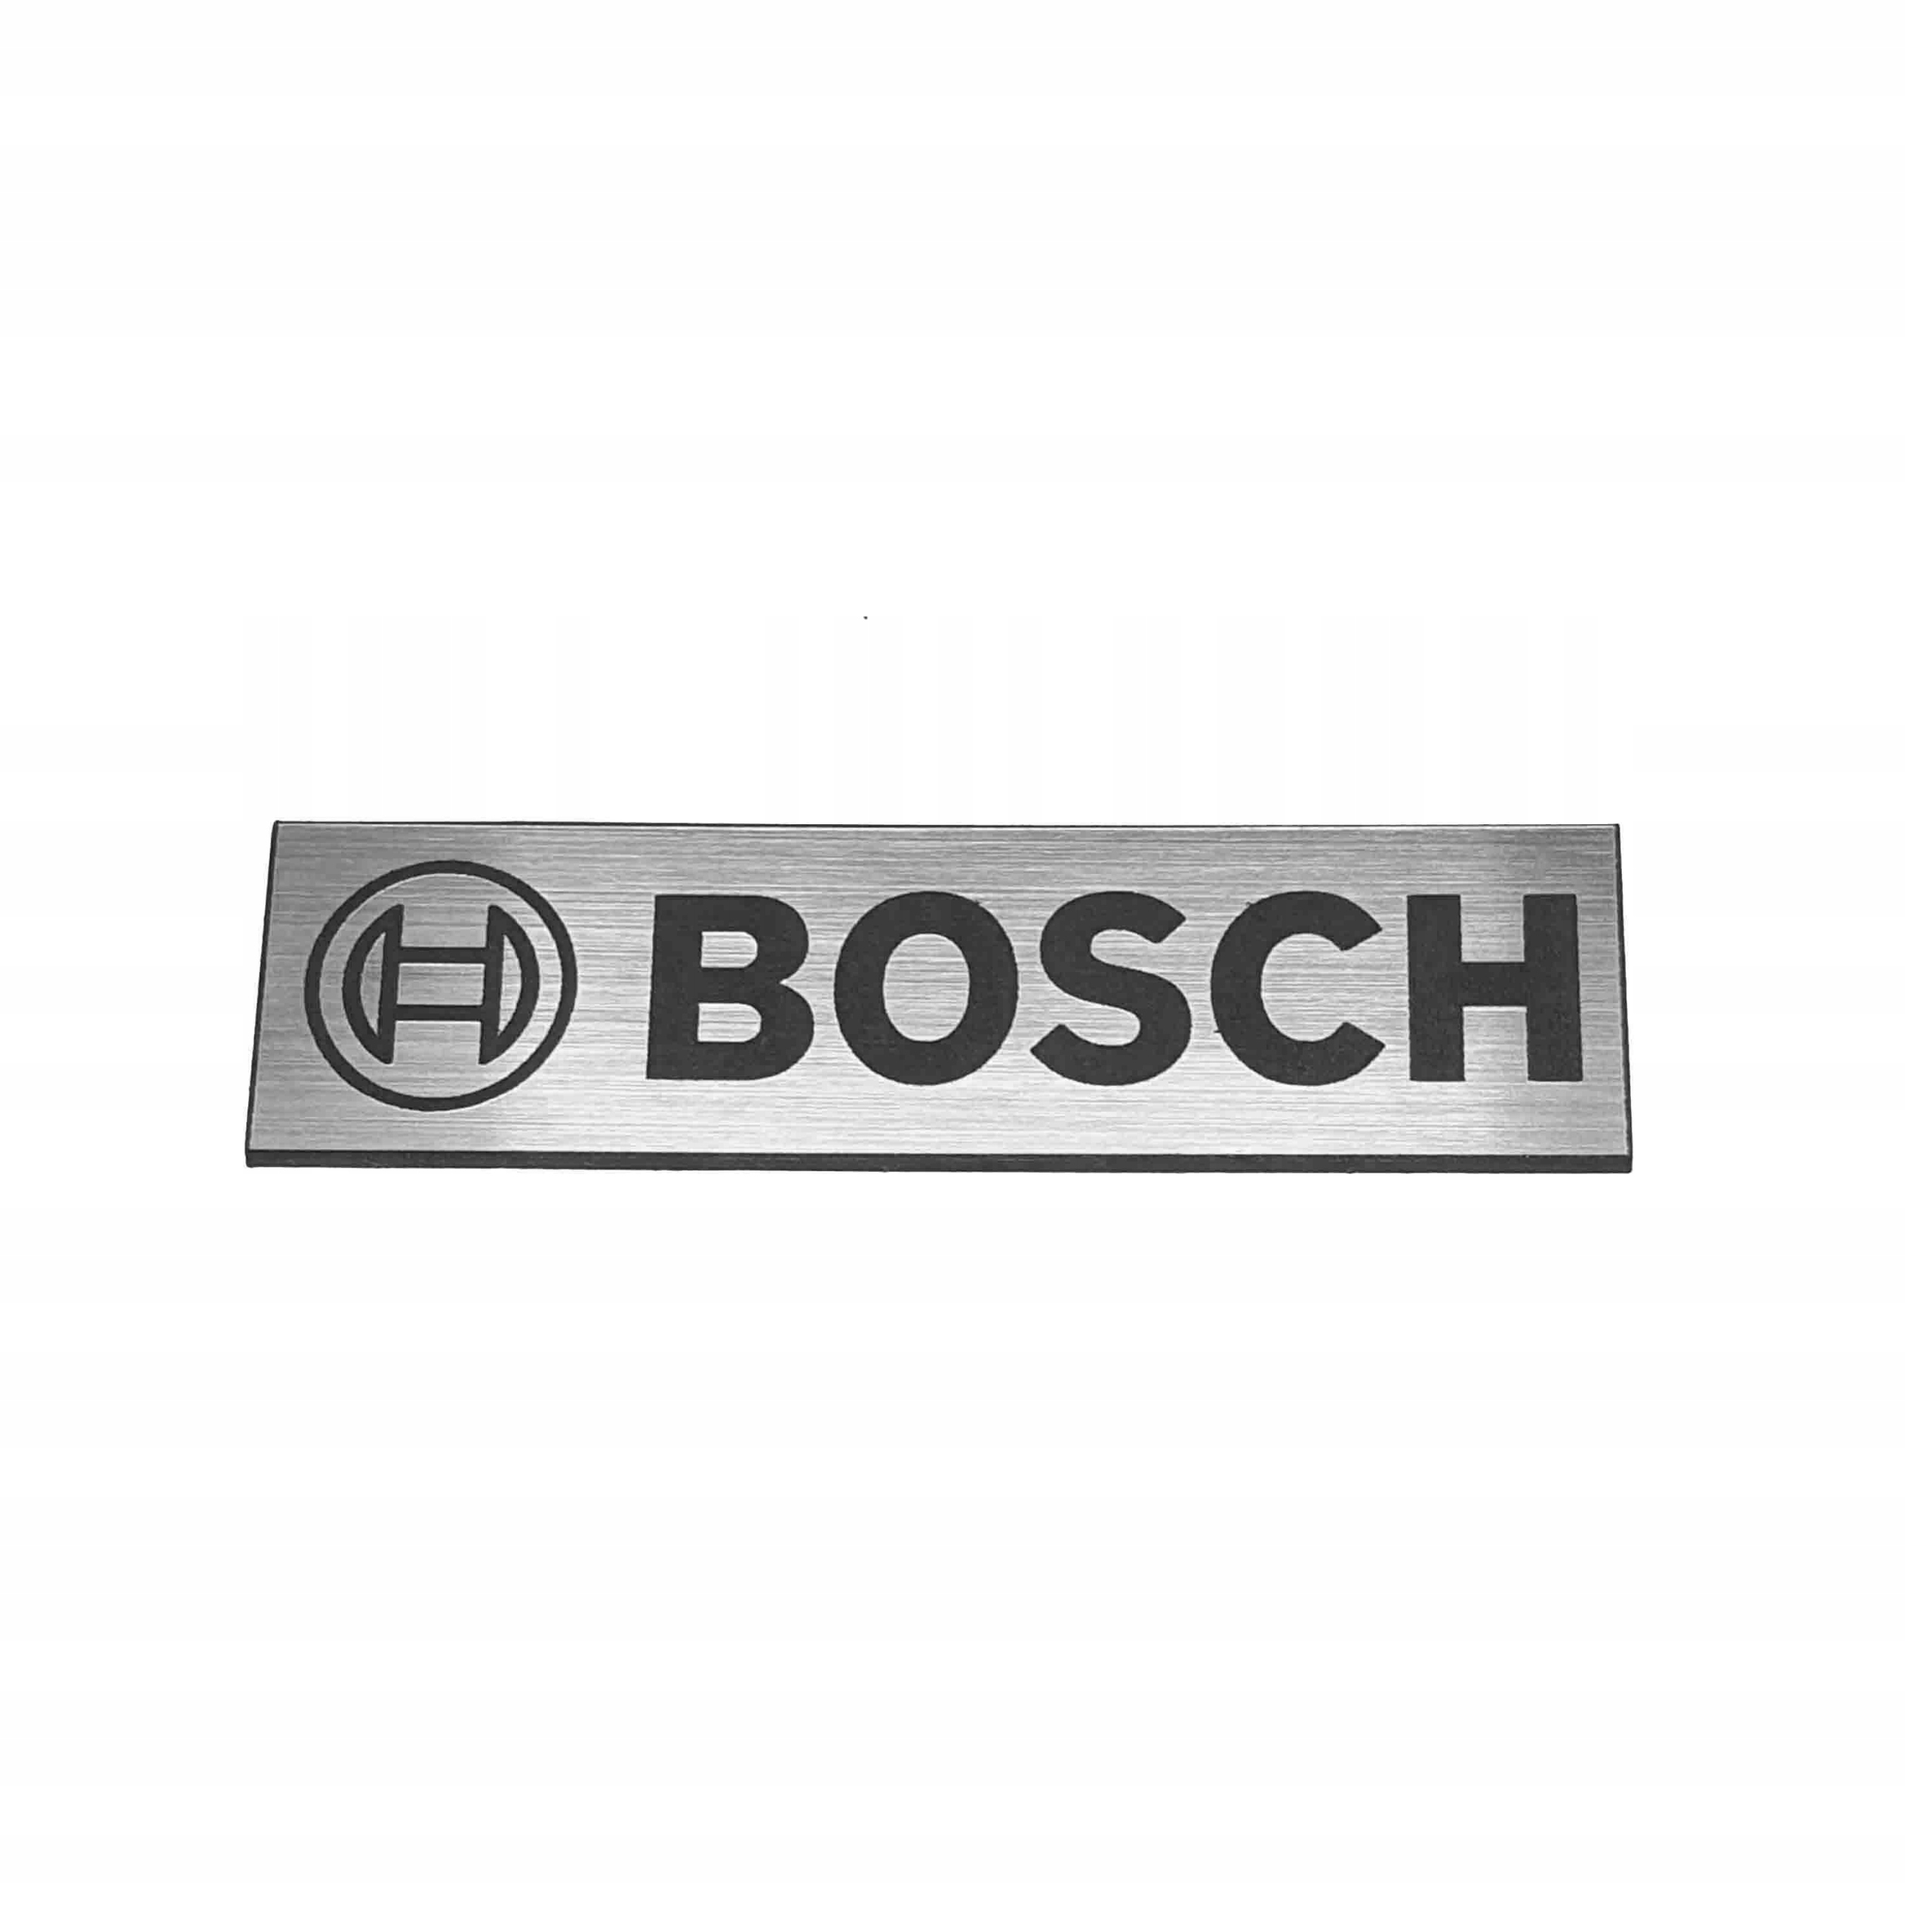 Бош эмблема. Логотип Bosch наклейка. Логотип Bosch купить. Наклейка bosch